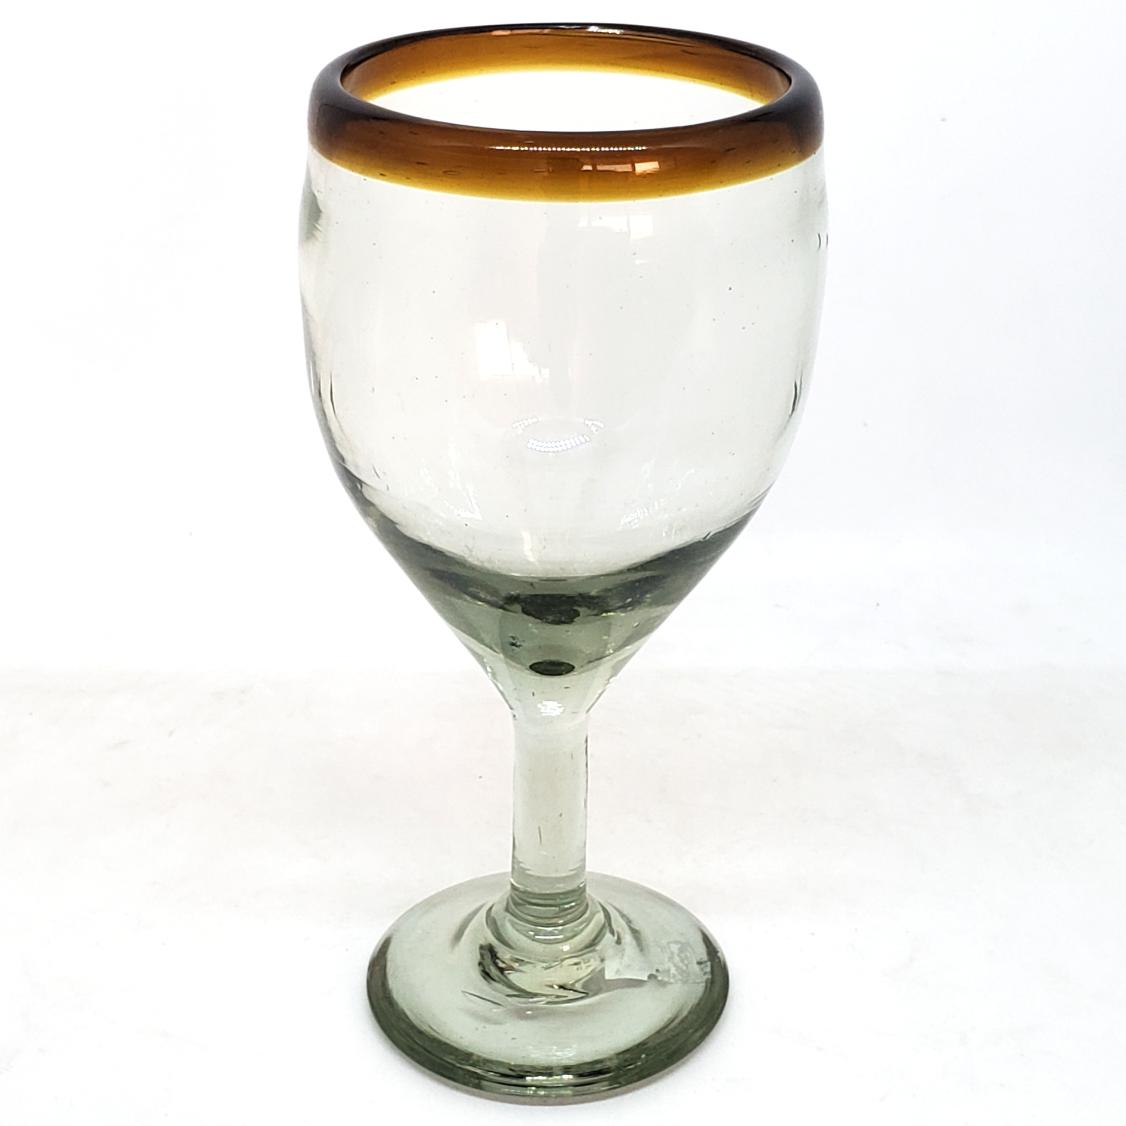 Ofertas / copas para vino con borde ambar / Capture el aroma de un fino vino tinto con stas copas decoradas con un borde ambar.